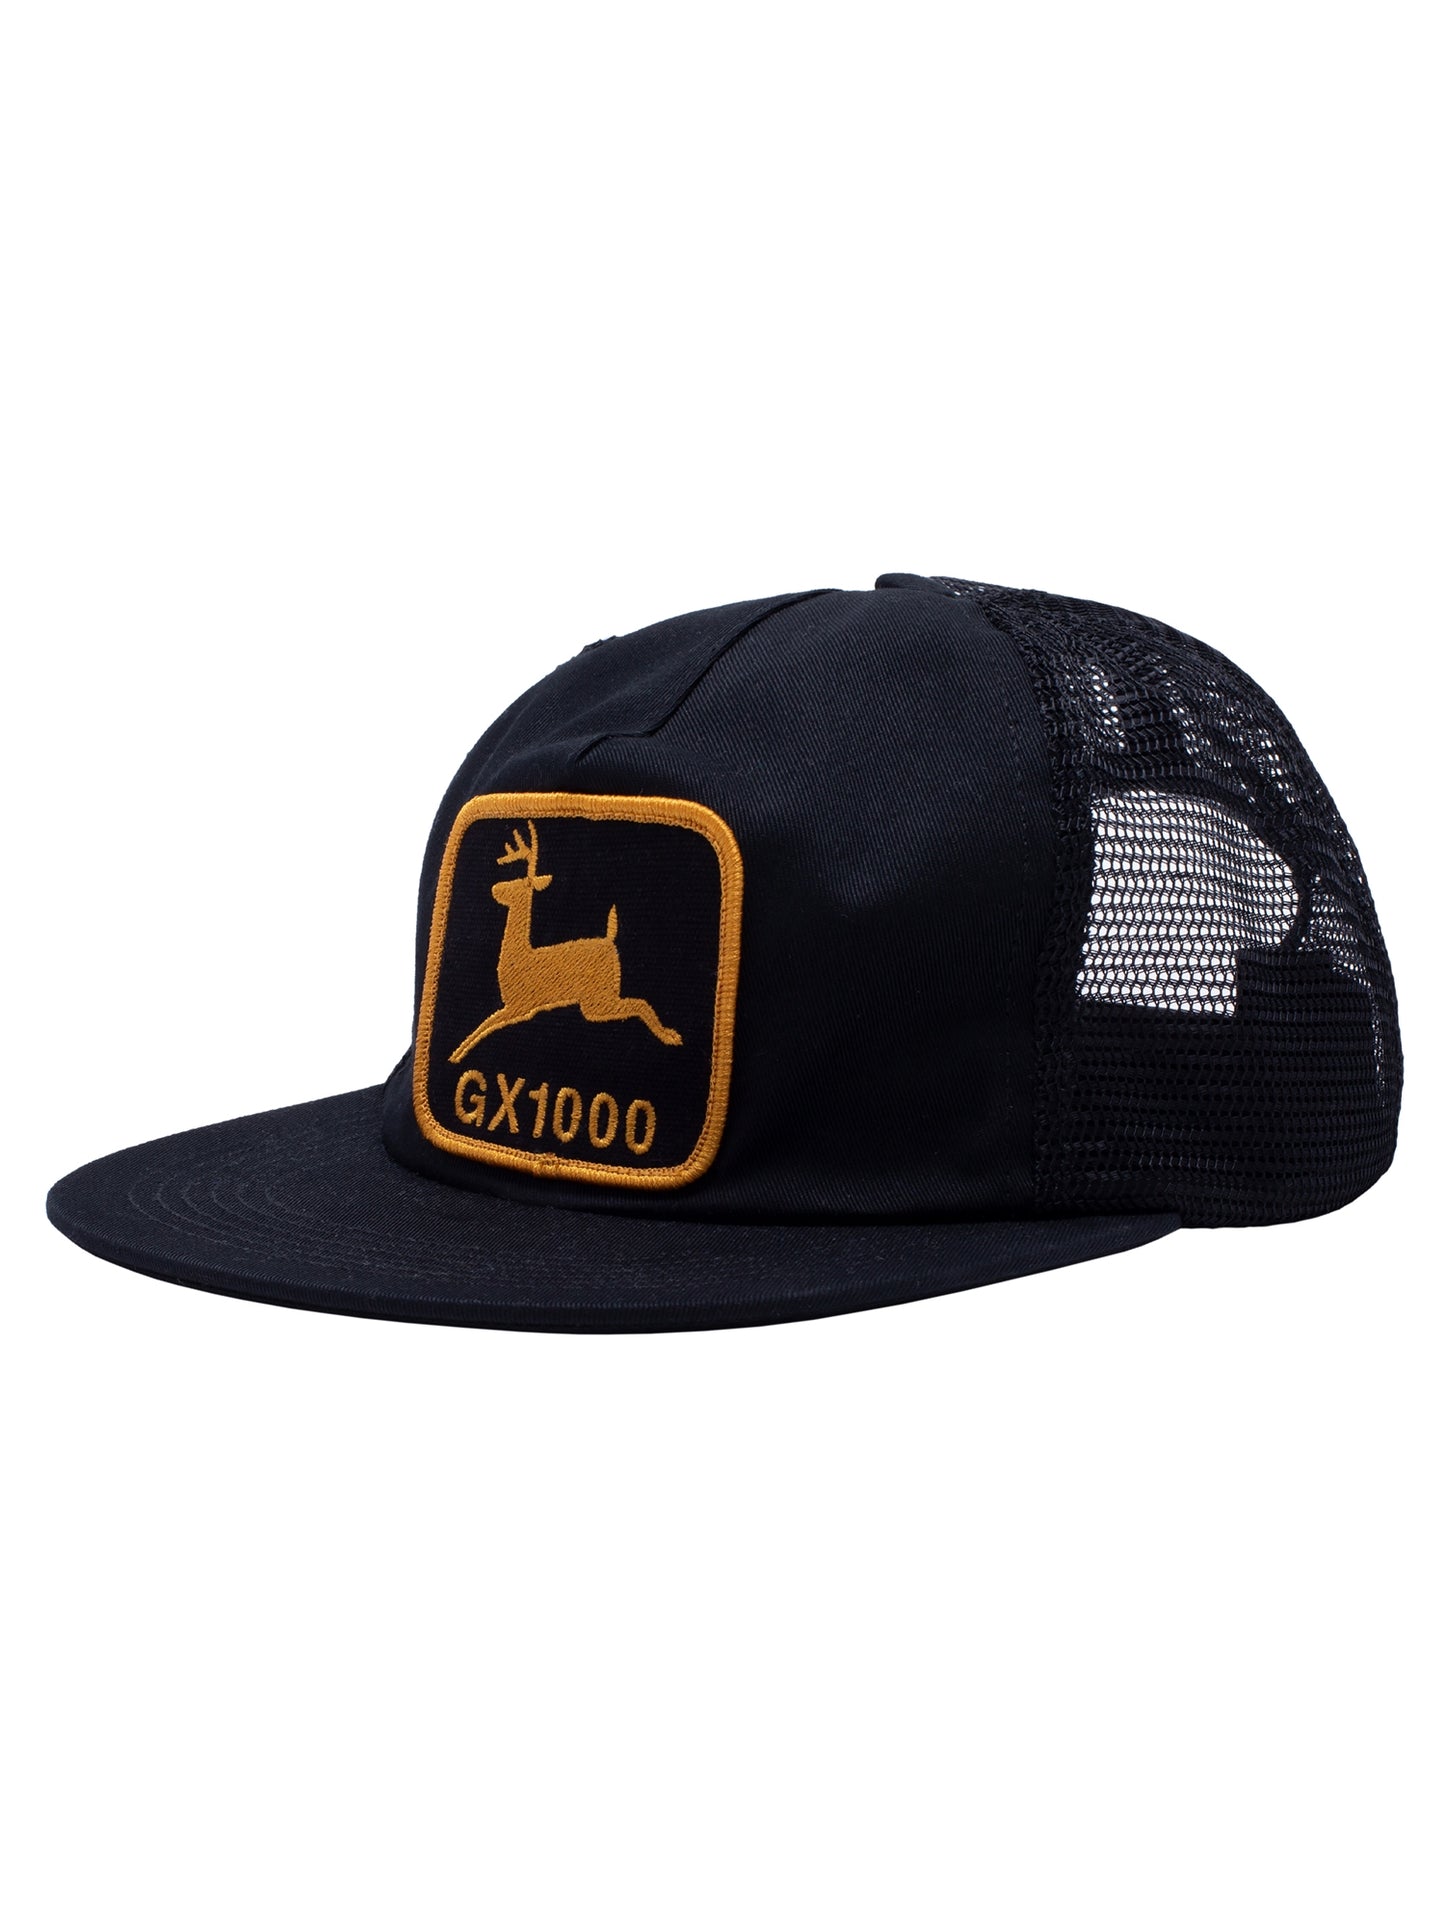 GX1000 Deer 5 Panel Polo Cap - Black